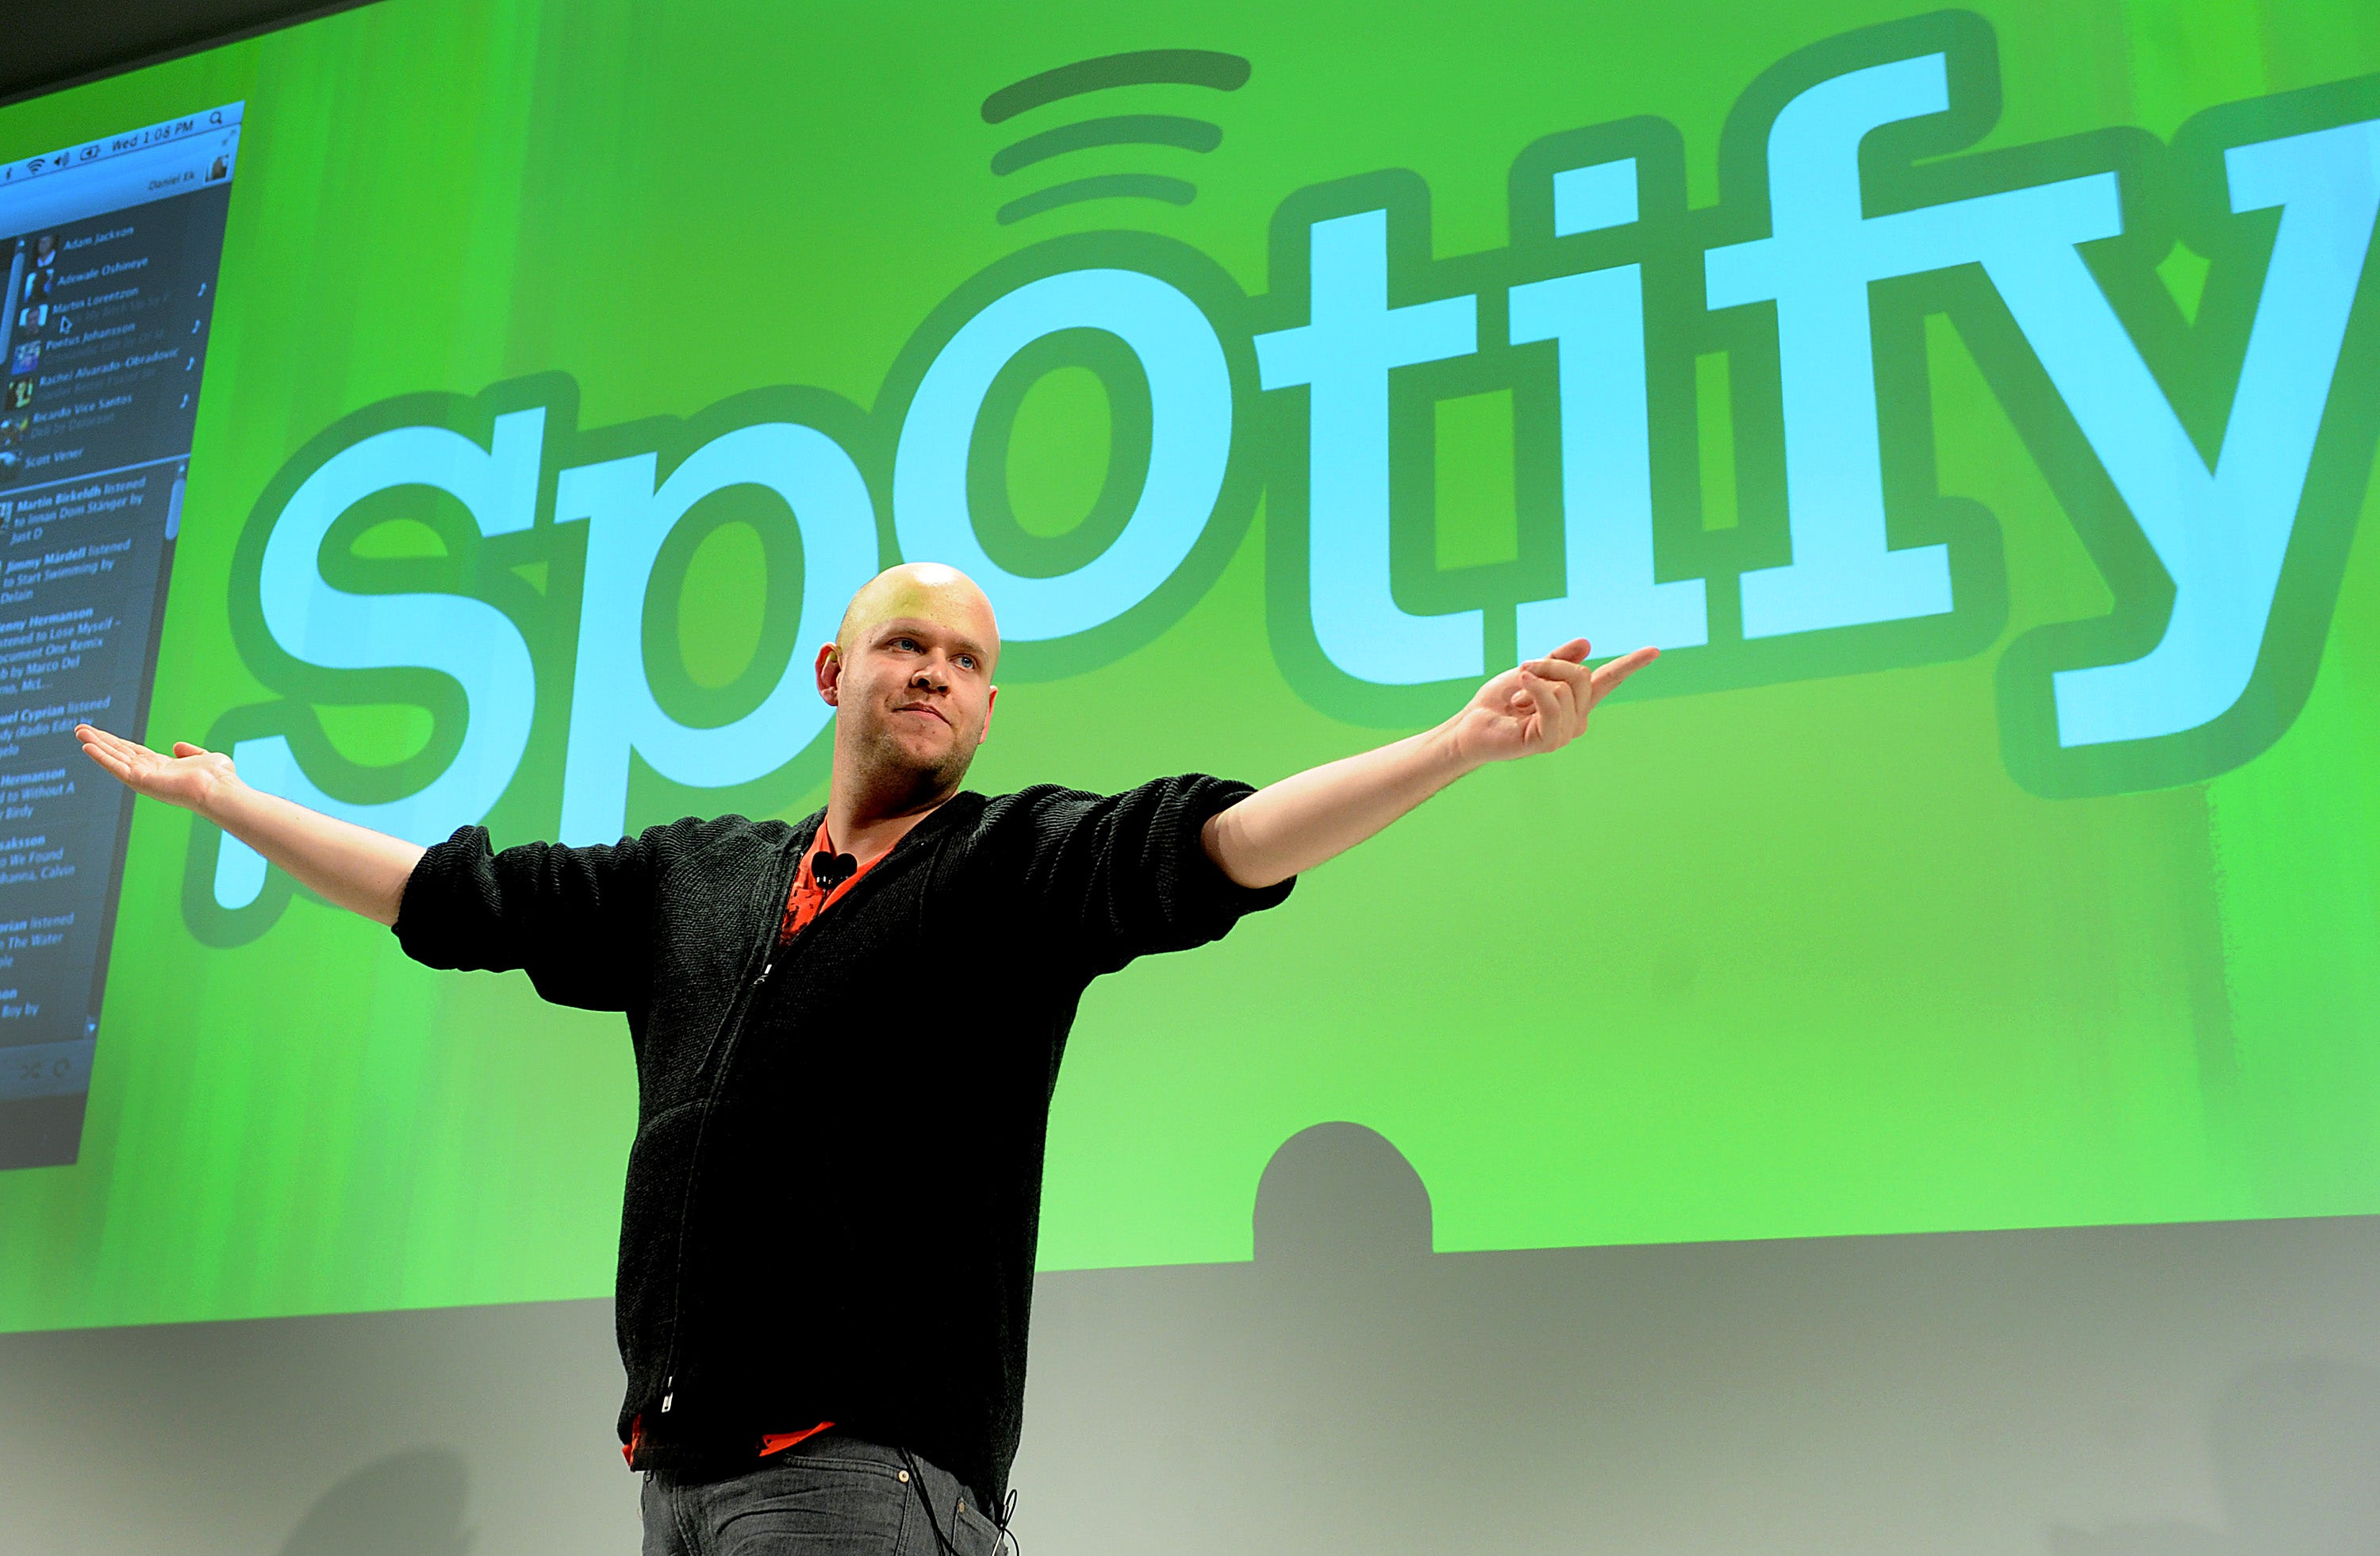 Too much power? Daniel Ek, the founder of Spotify